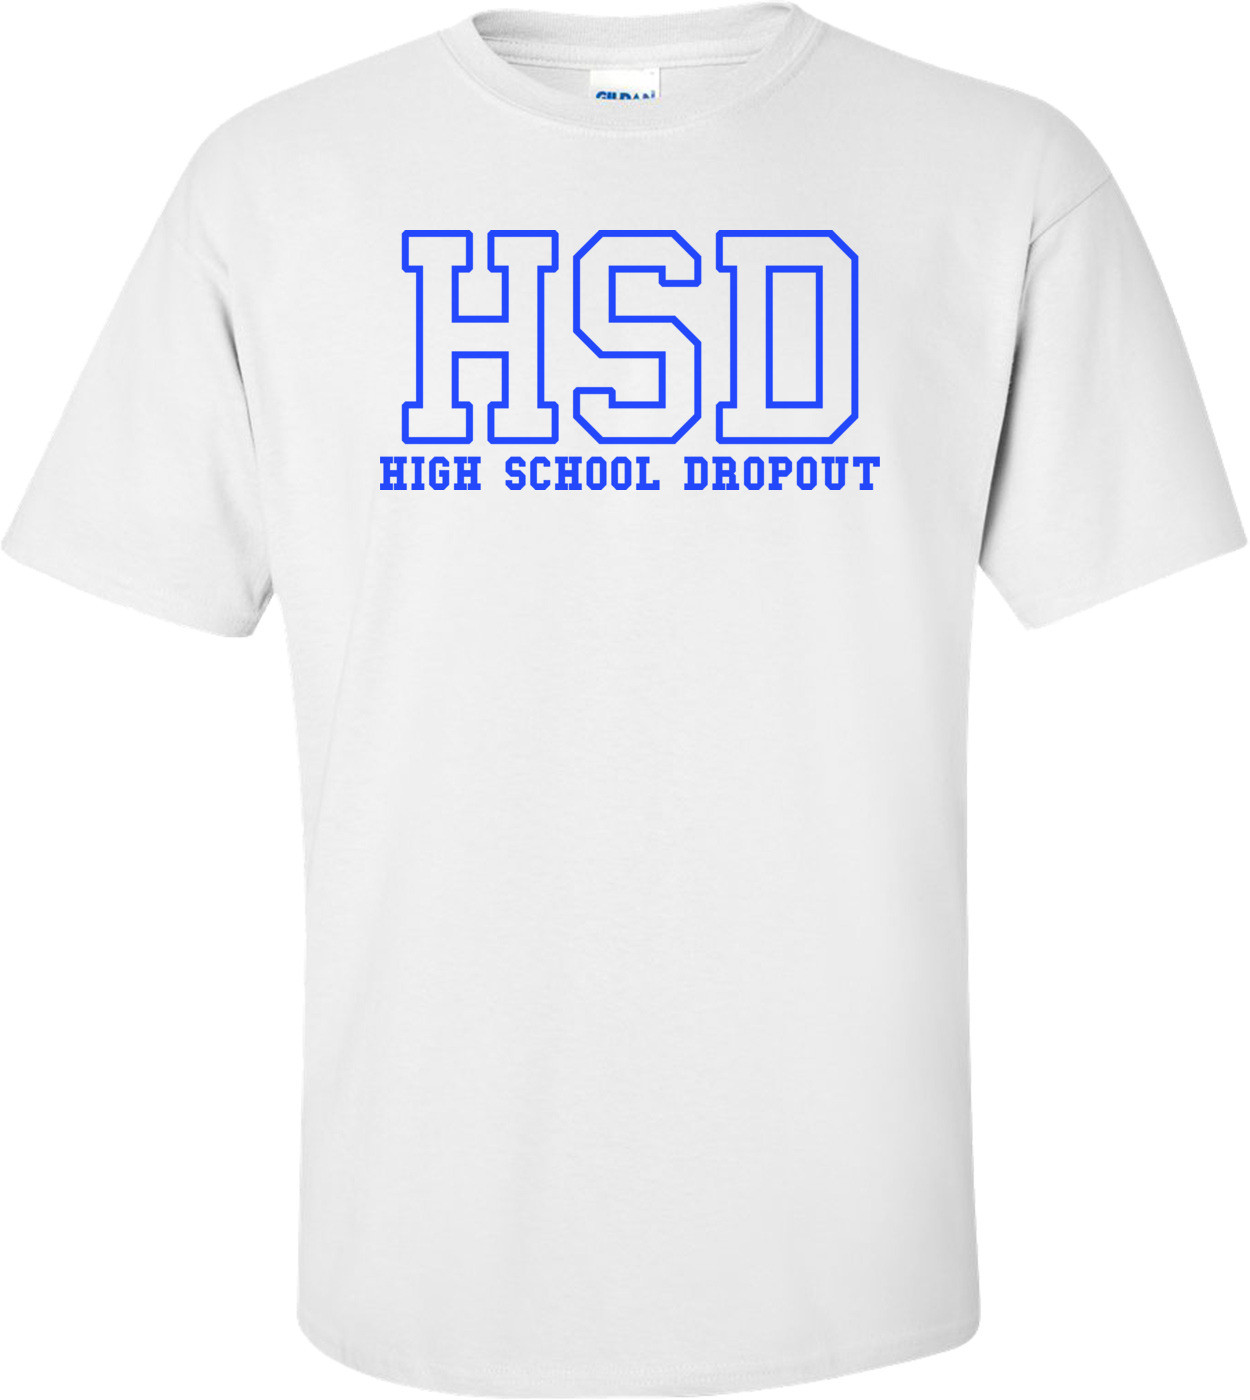 High School Dropout Shirt